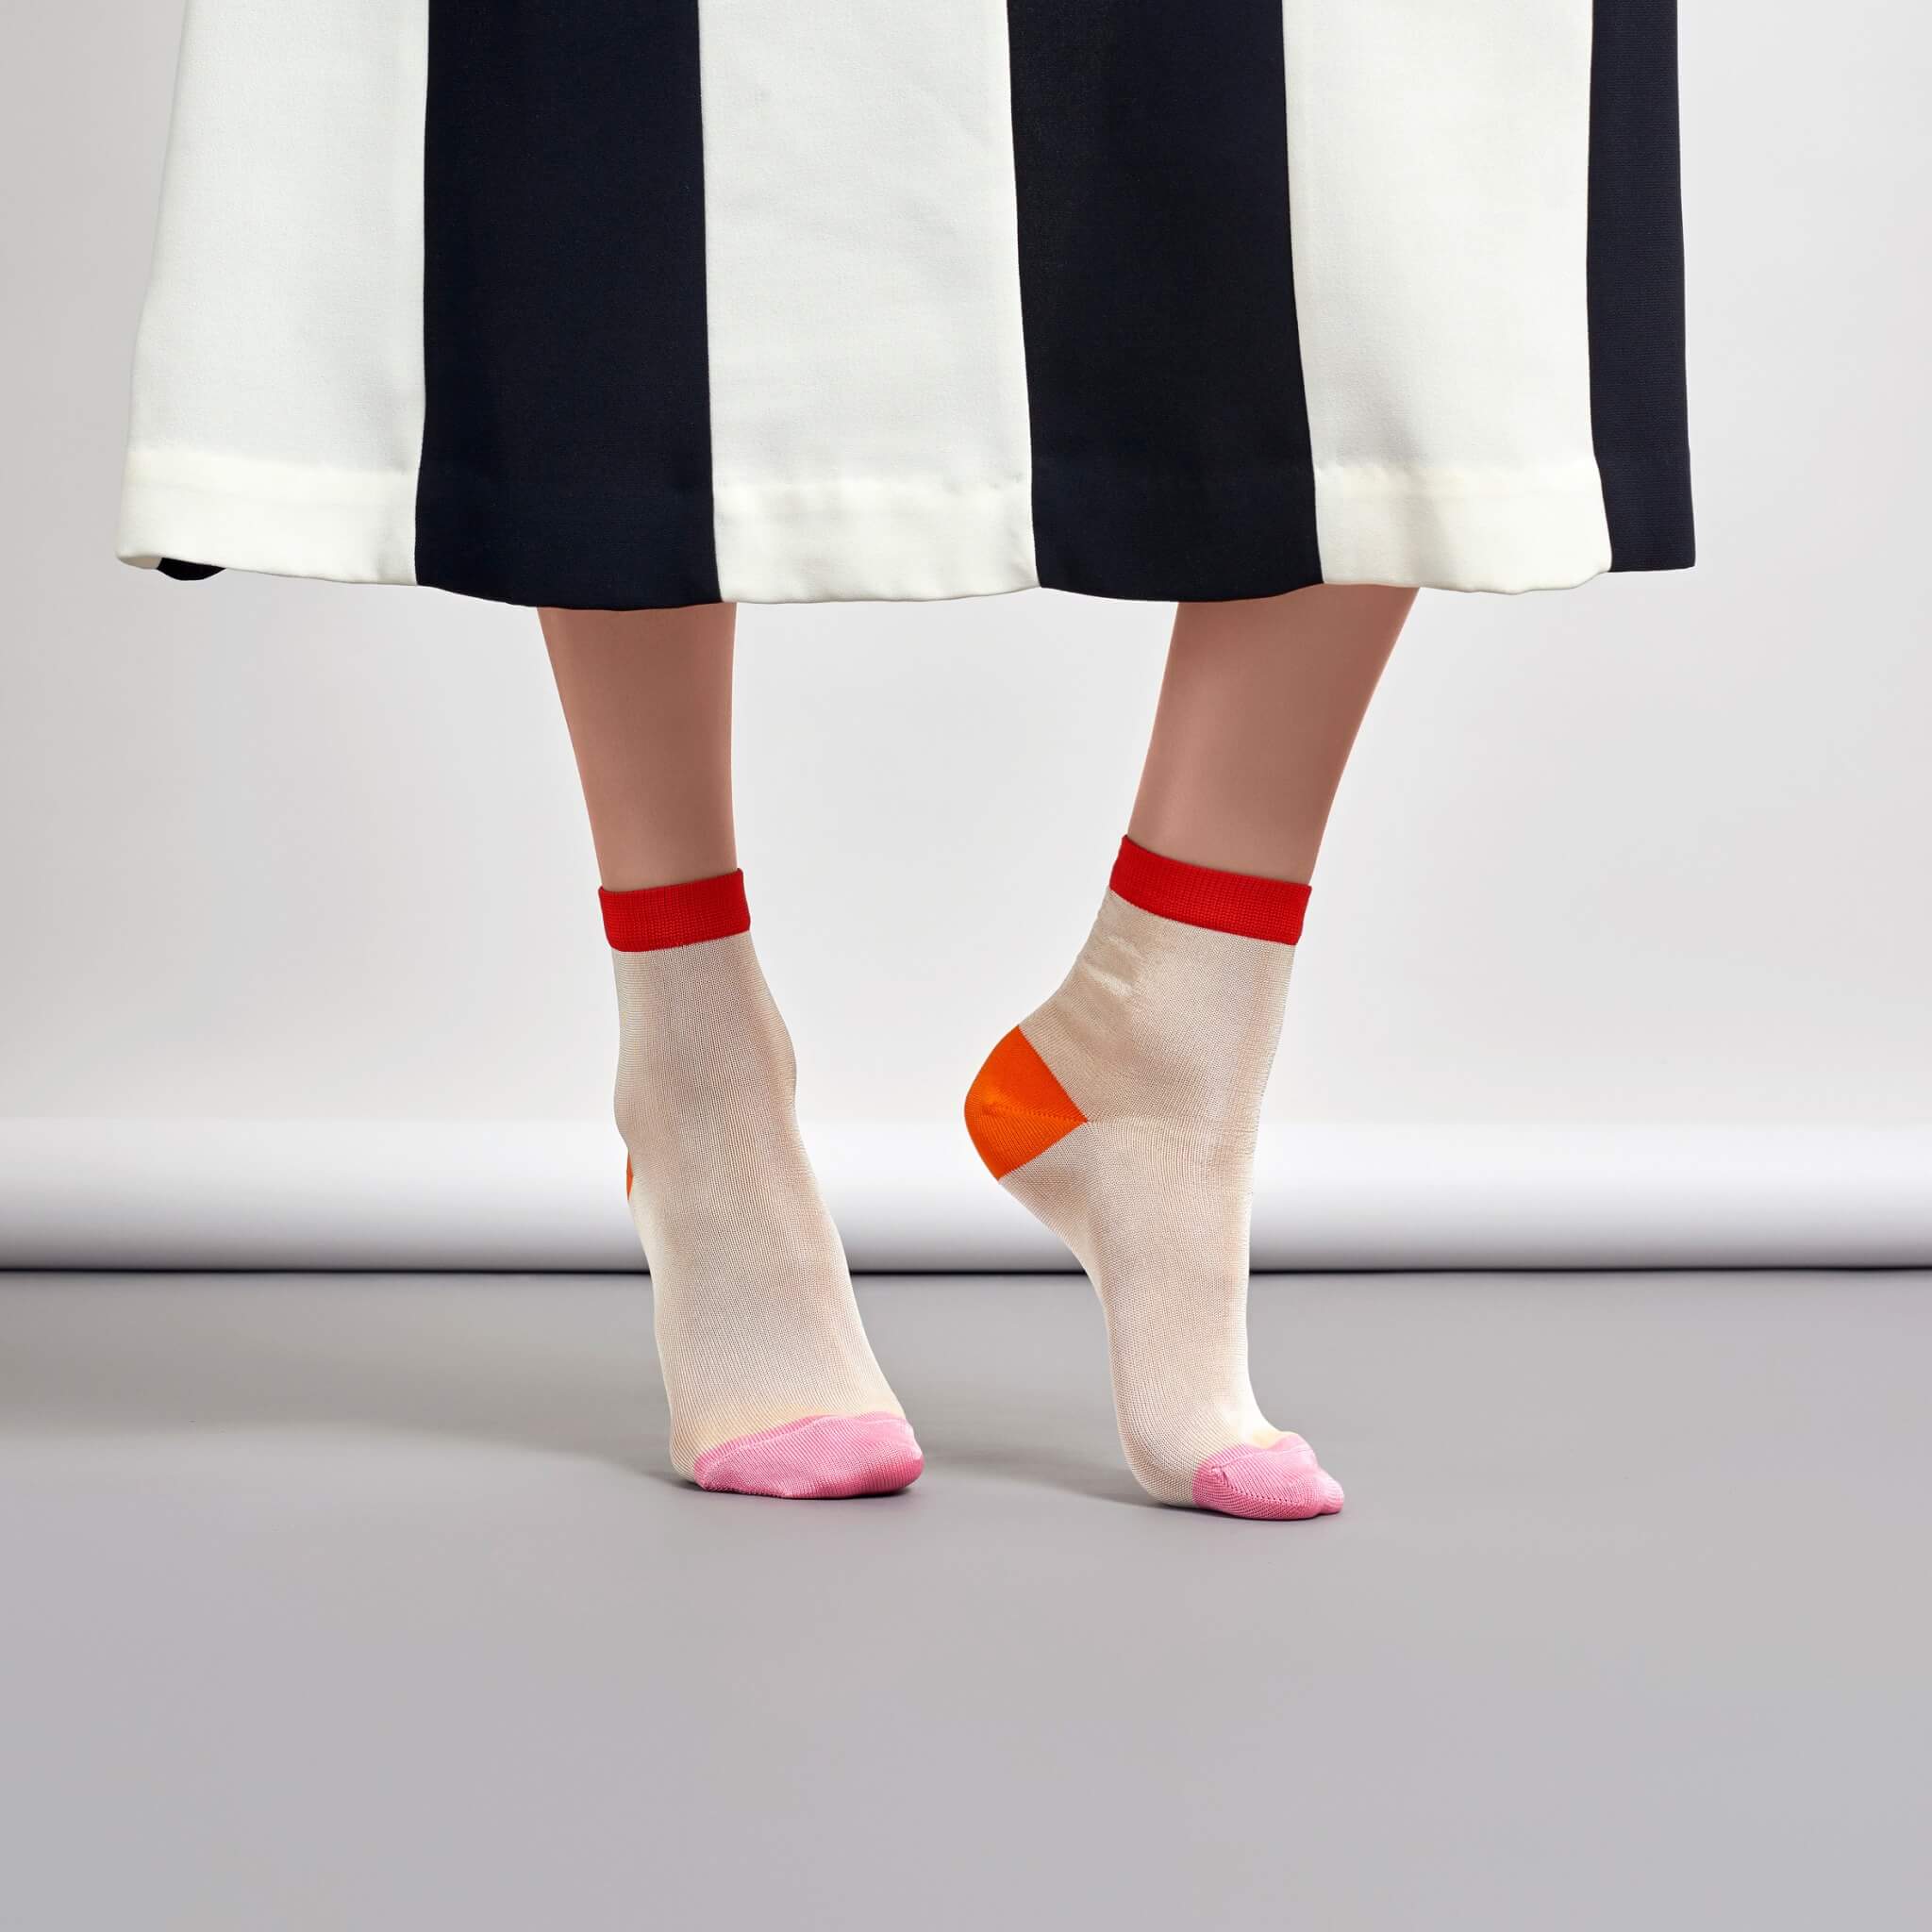 Dámske krémové ponožky Happy Socks Grace // kolekcia Hysteria